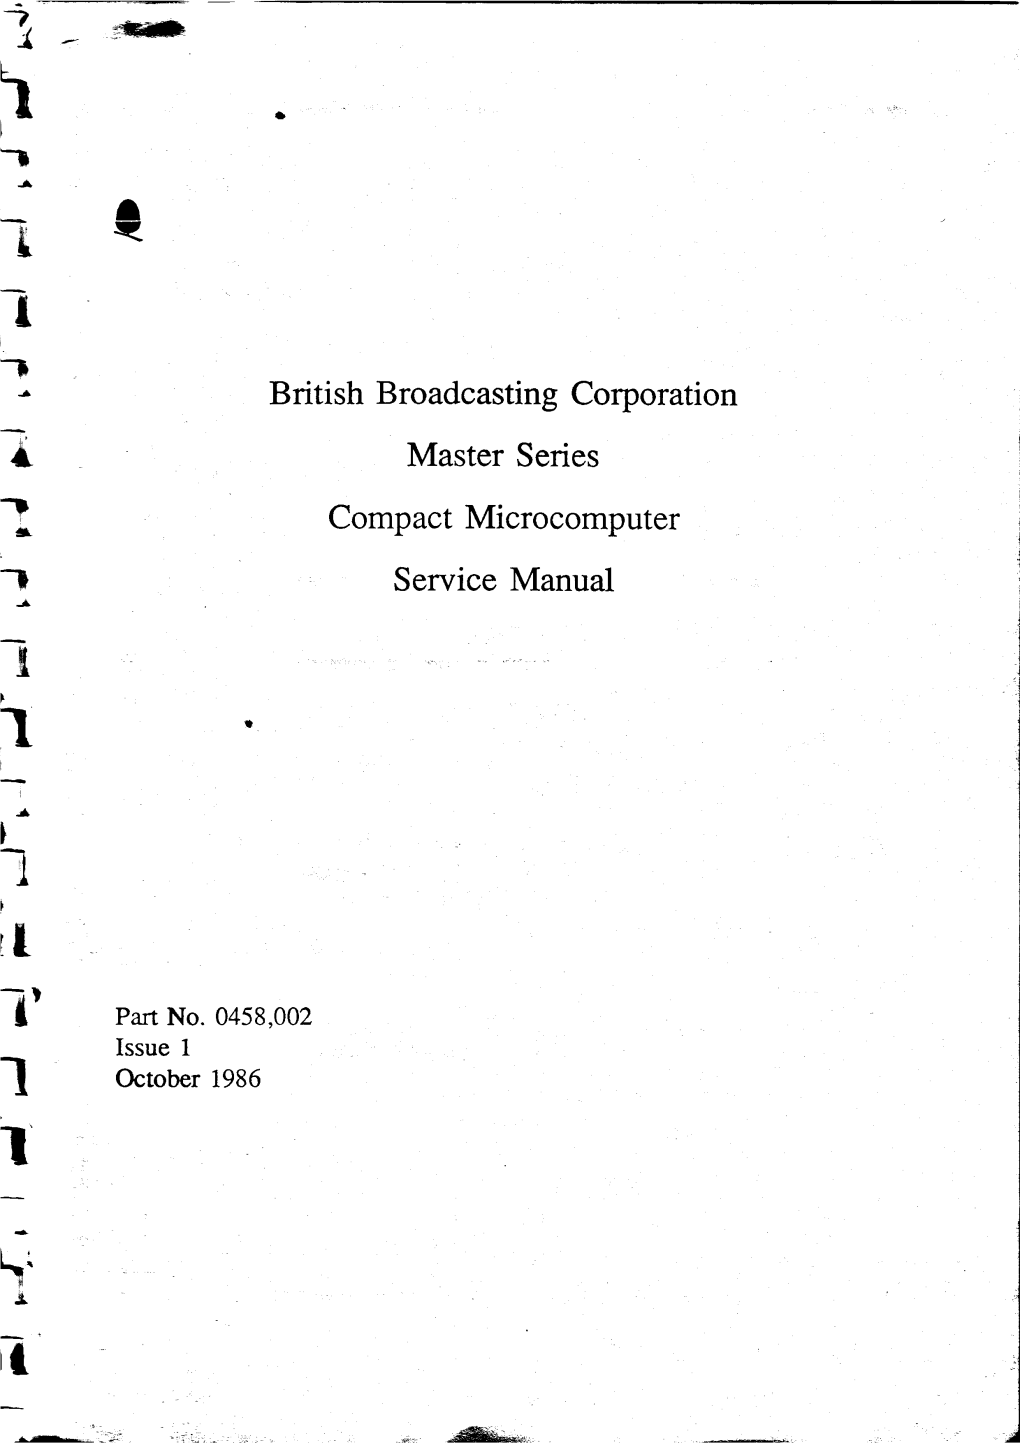 Master Series Compact Microcomputer Service Manual